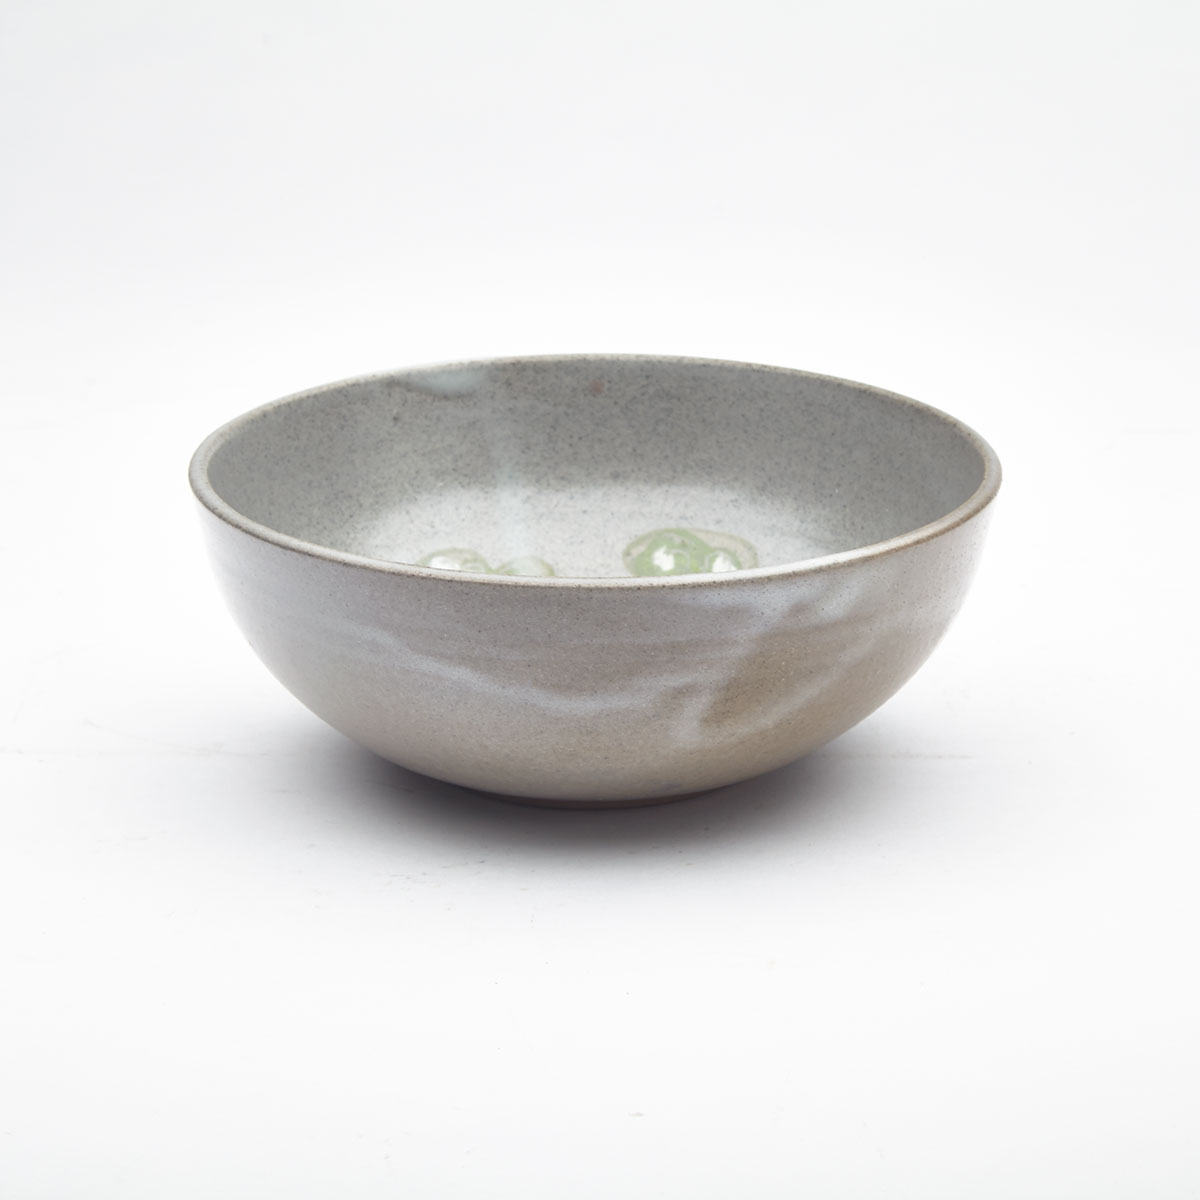 Deichmann Stoneware ‘Goofus’ Bowl, Kjeld & Erica Deichmann, c.1950